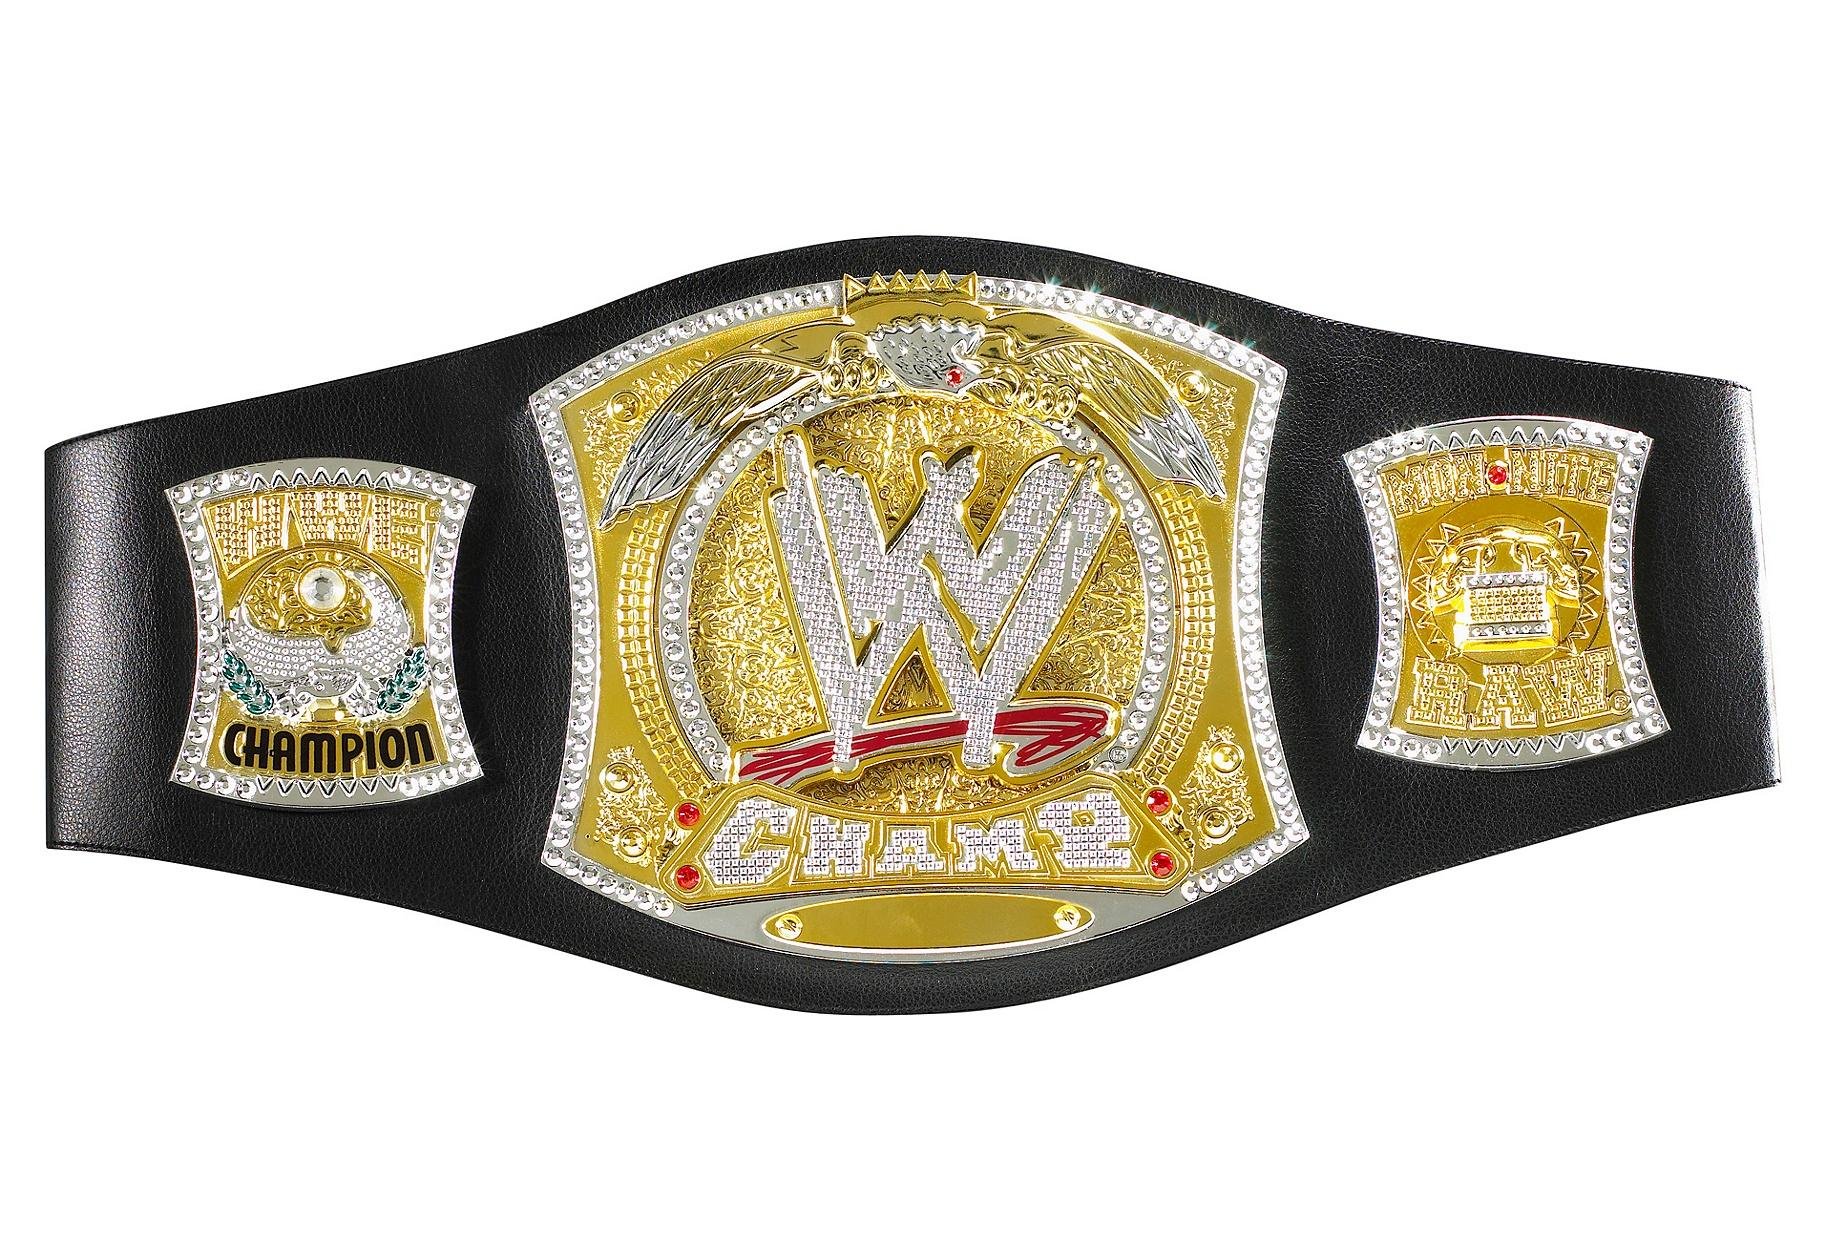 WWE Championship Belts Assortment Review